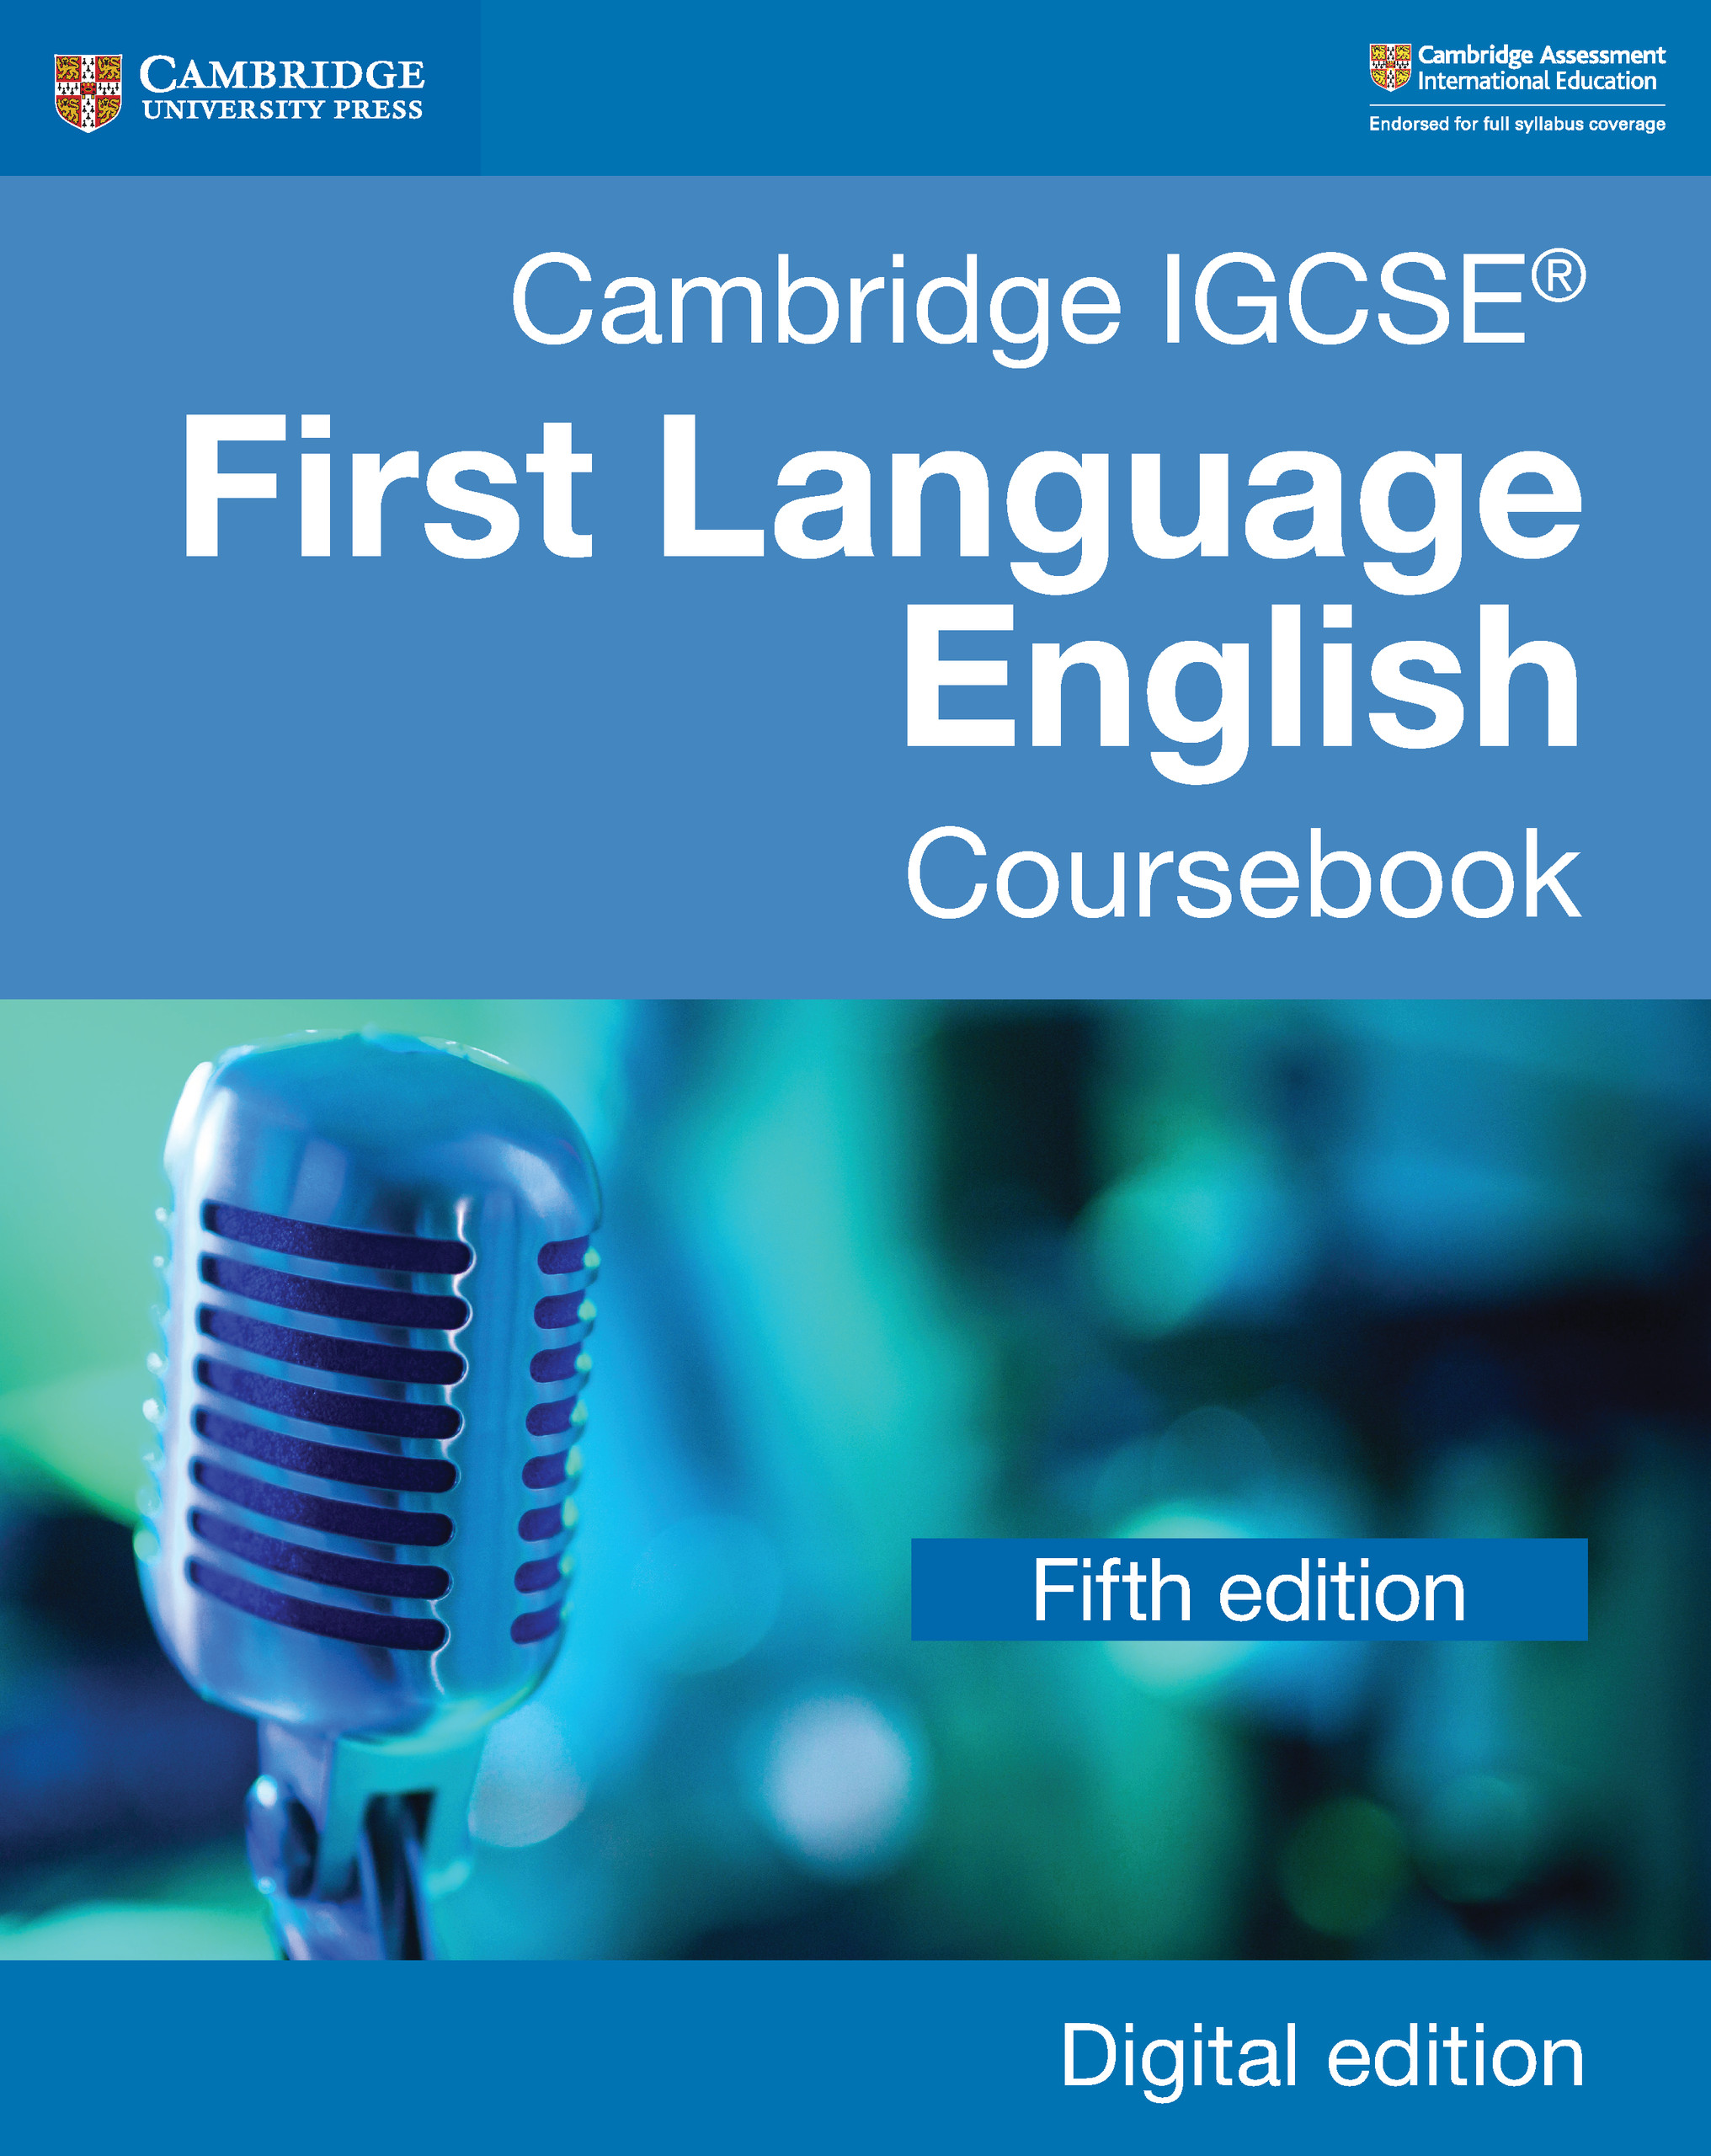 pdf-ebook-cambridge-igcse-first-language-english-coursebook-digital